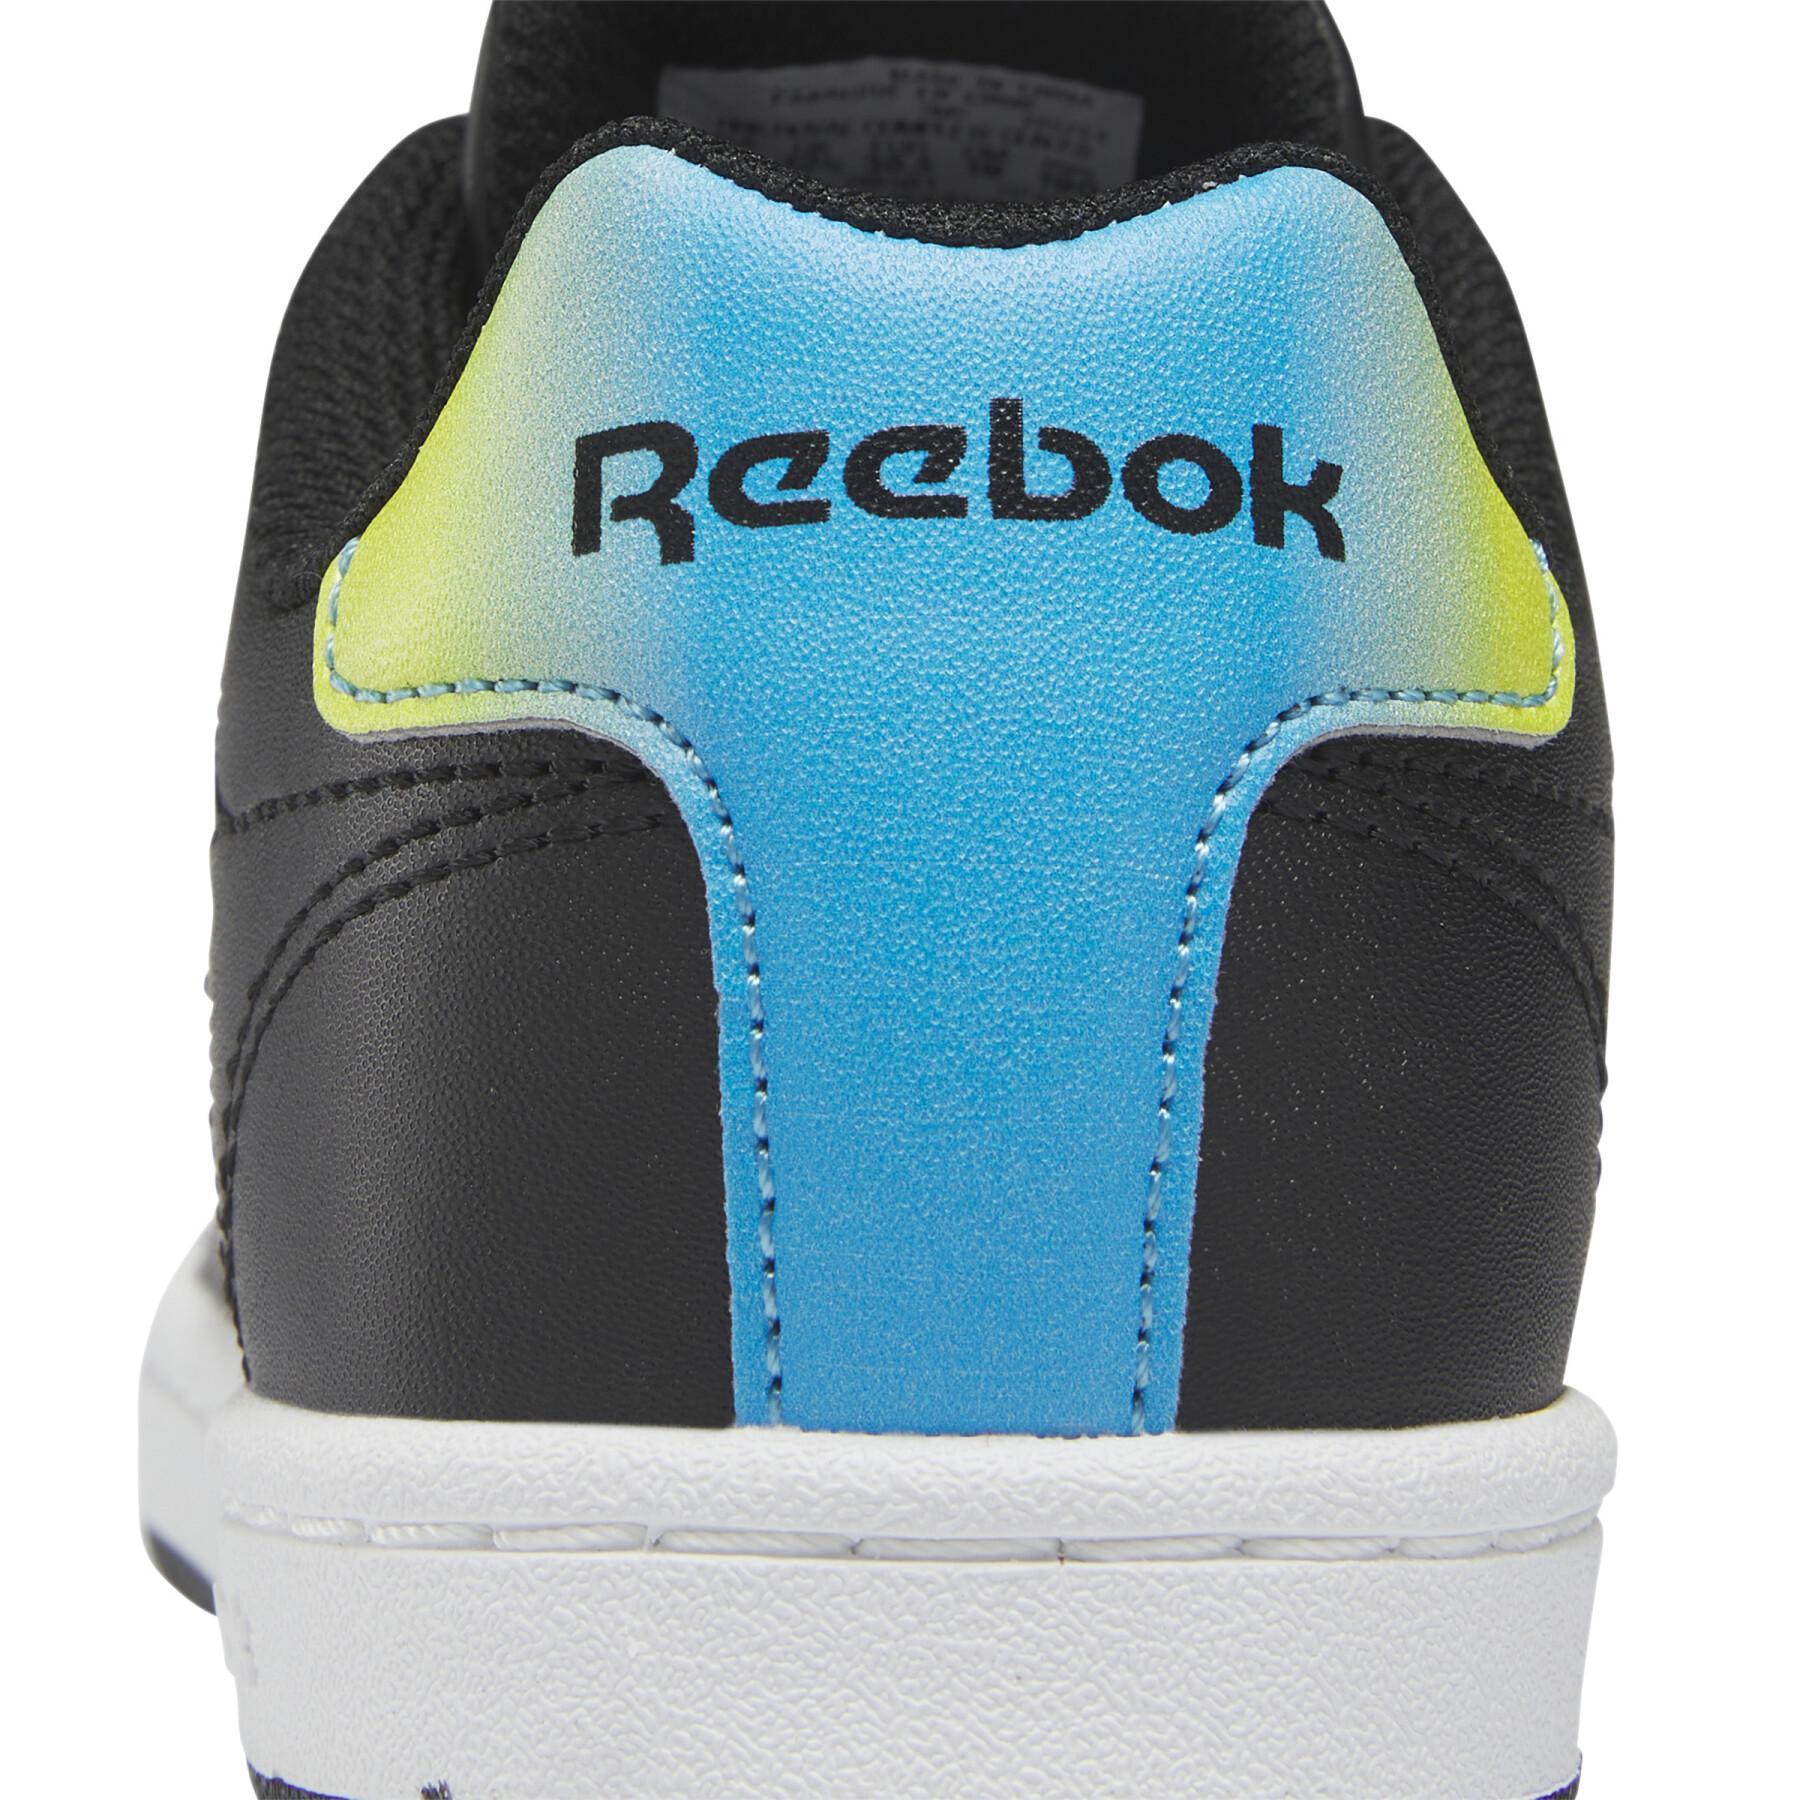 Children's sneakers Reebok Royal Complete Cln 2